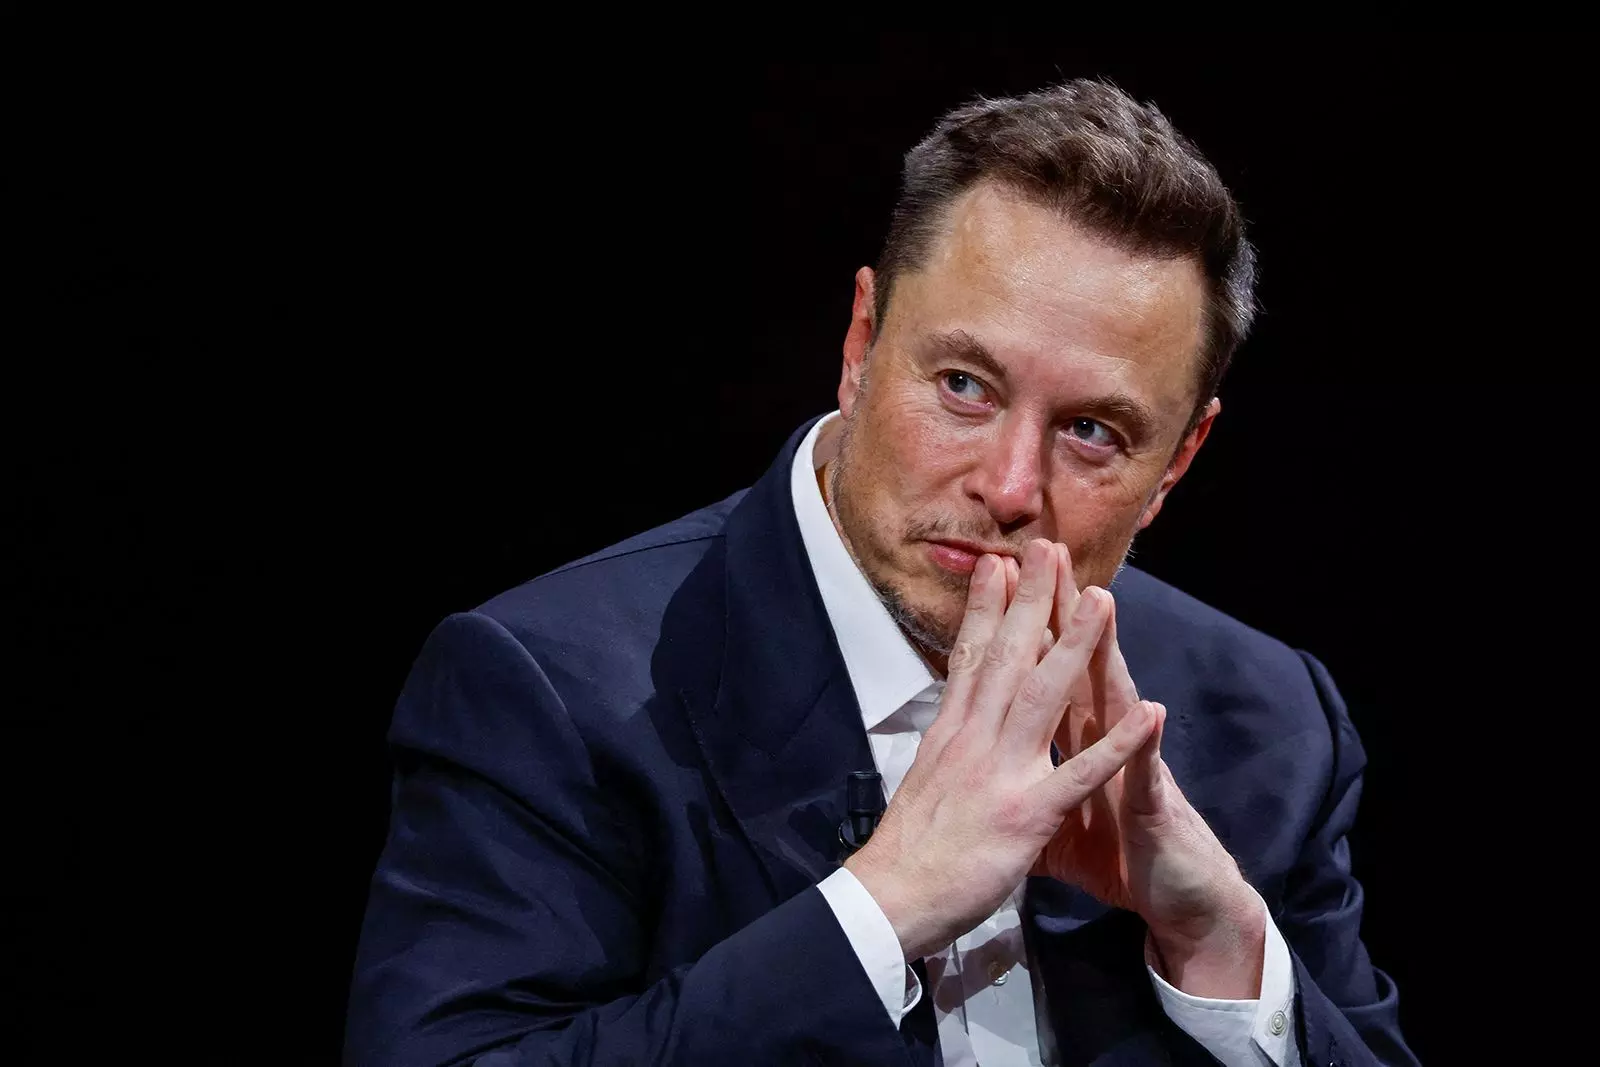 Musk relies a lot on gut instinct at Twitter, not data: former executive